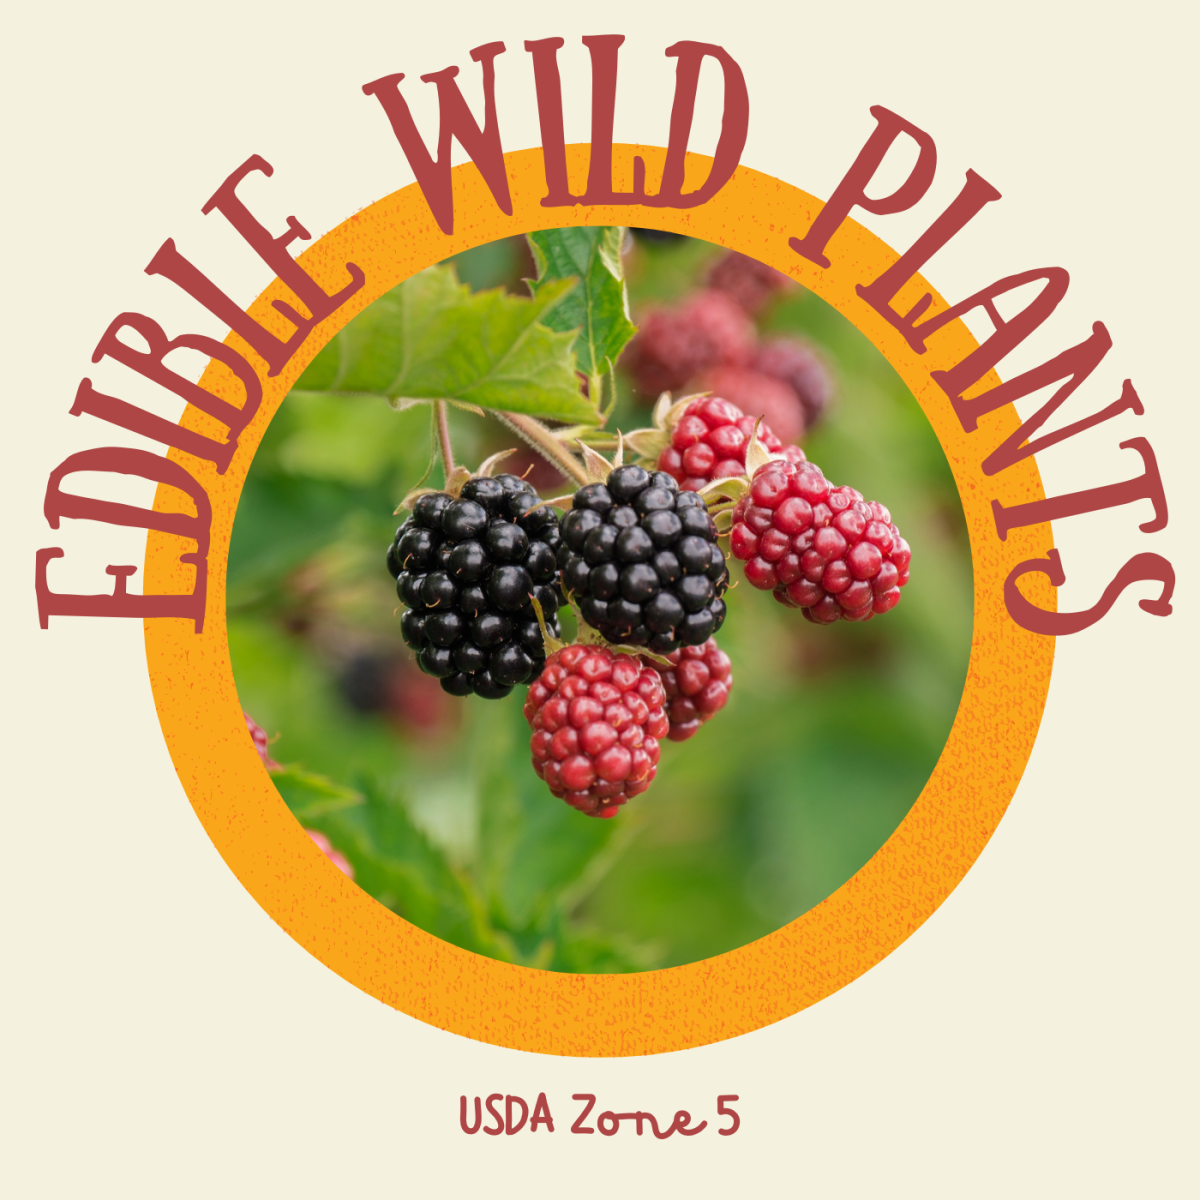 Edible Wild Plants in USDA Zone 5